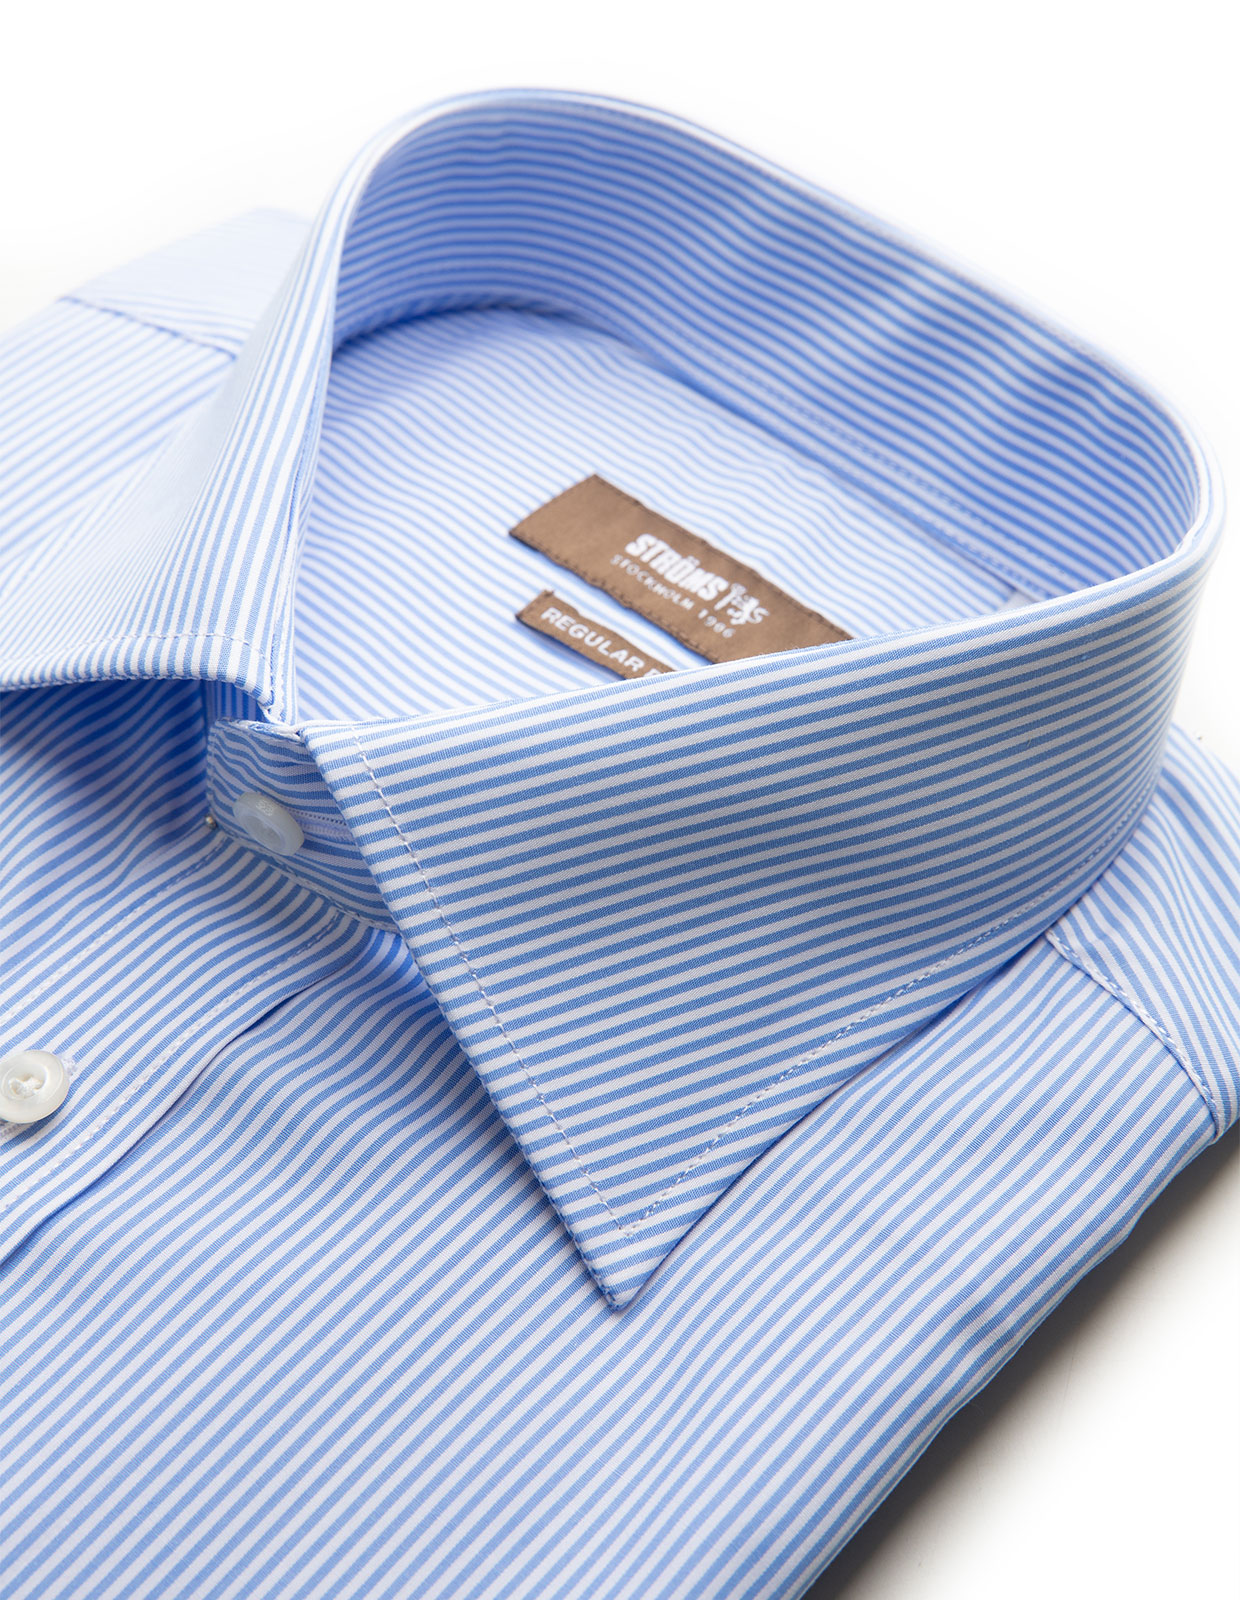 Regular Fit Travel Cotton Shirt Pinstripe Blue/White